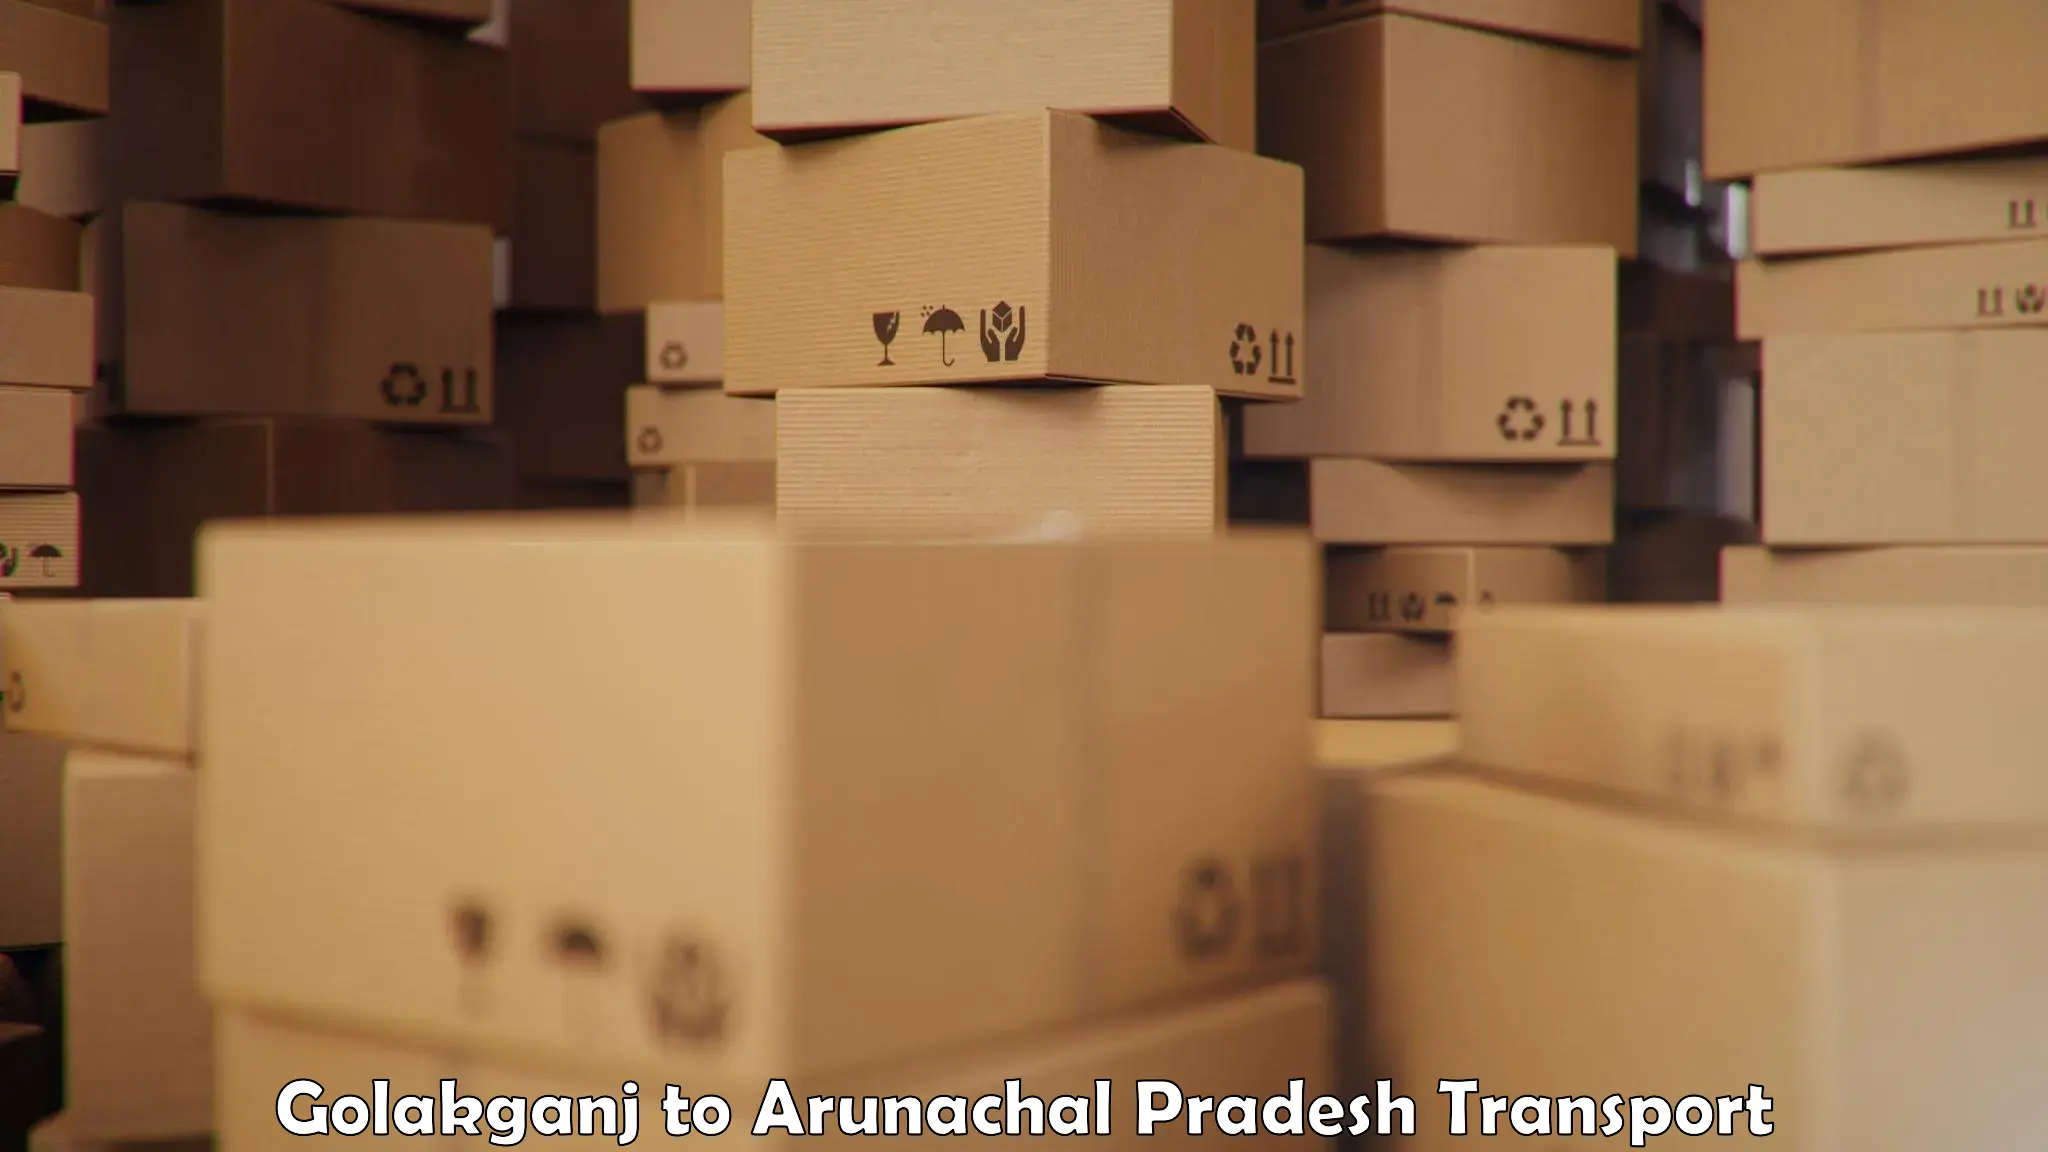 Truck transport companies in India Golakganj to Arunachal Pradesh